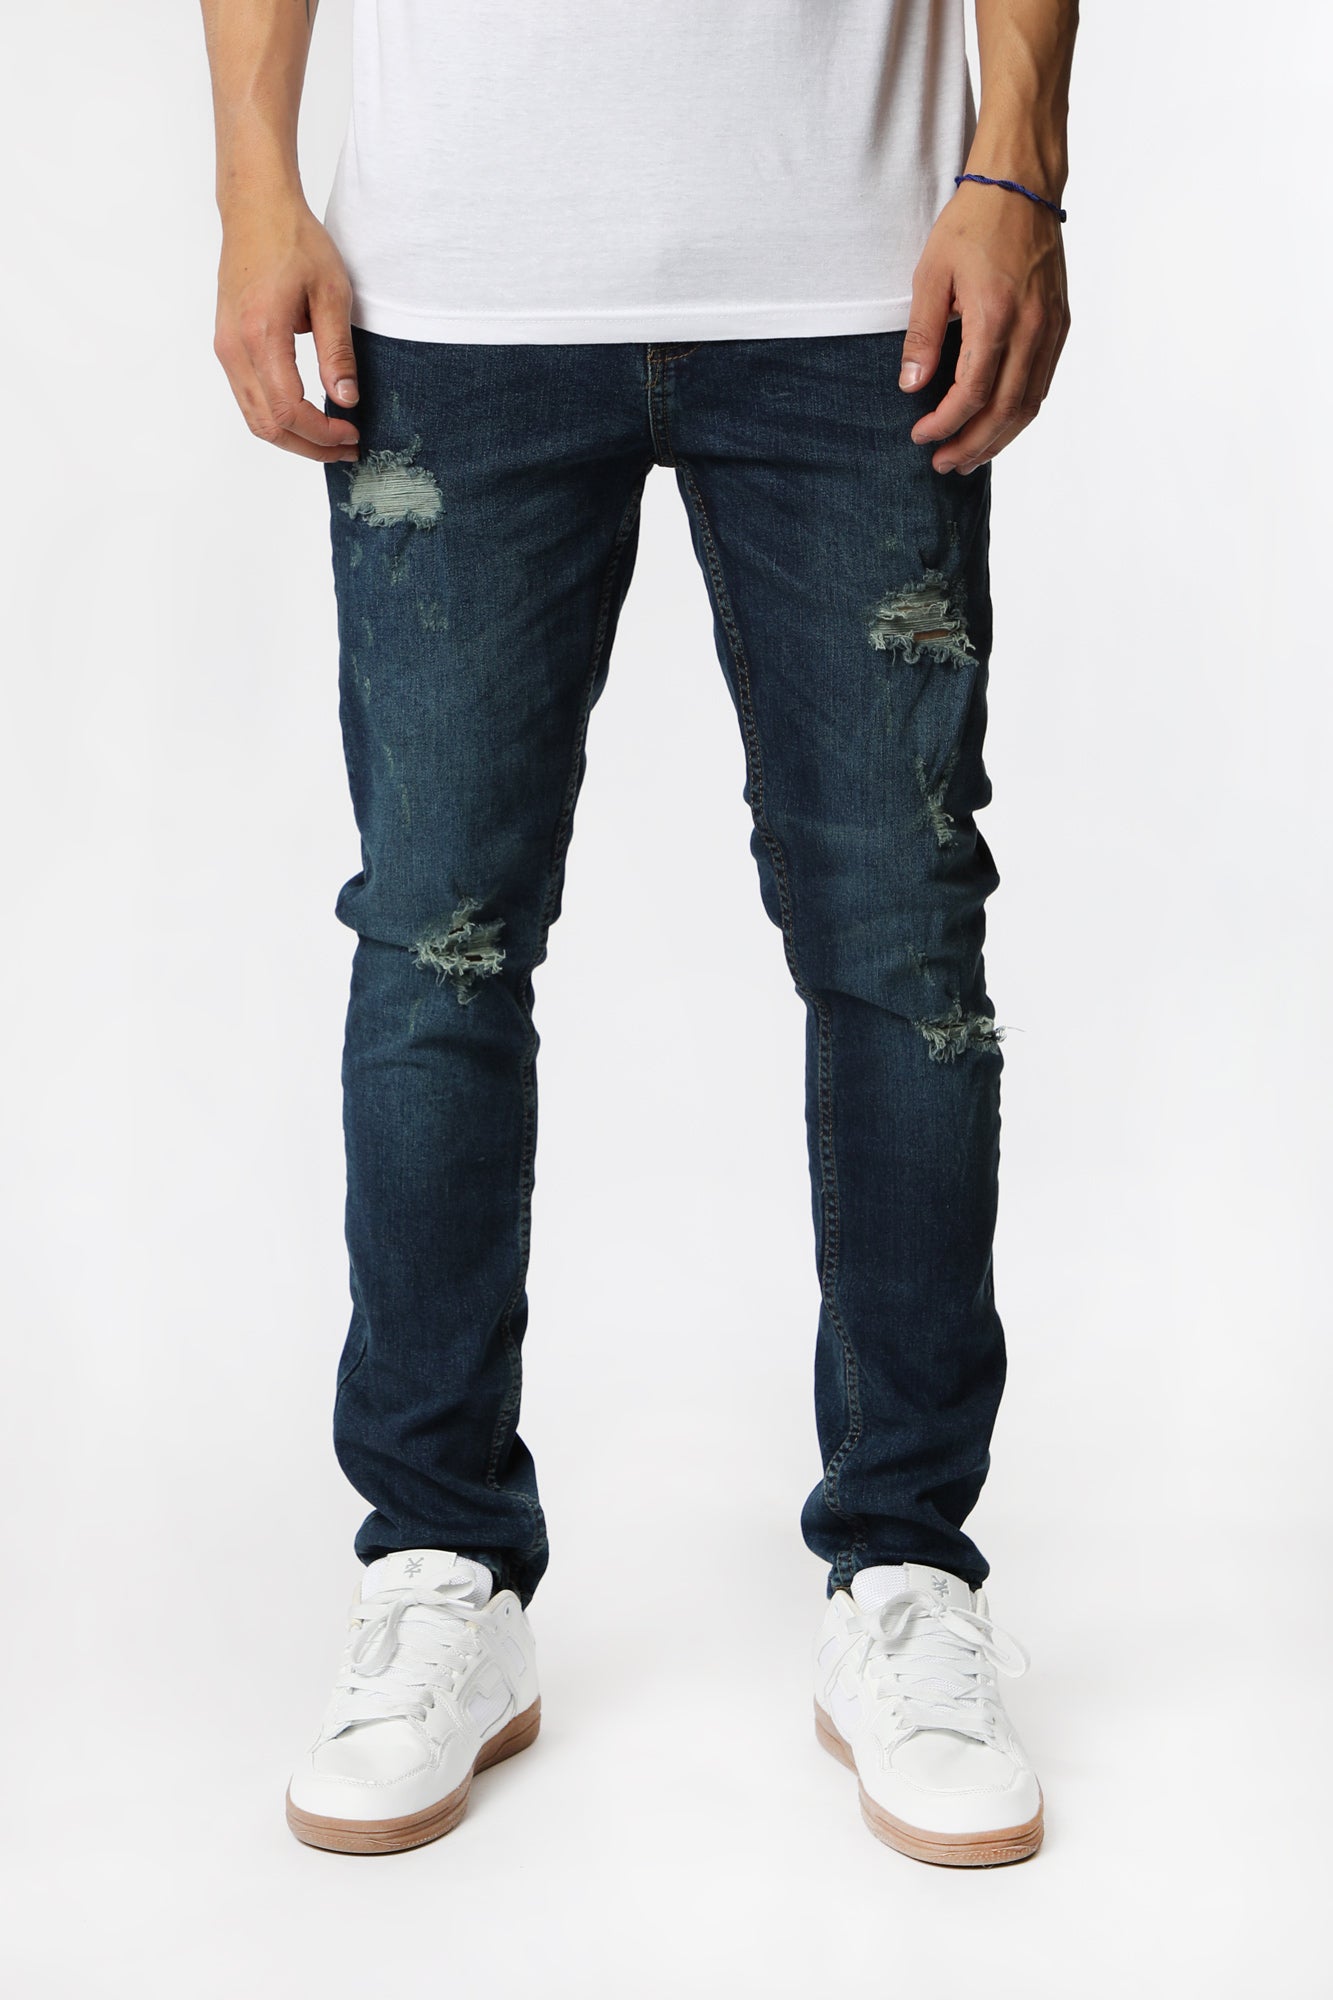 West49 Mens Distressed Skinny Jeans - Rinse Denim /